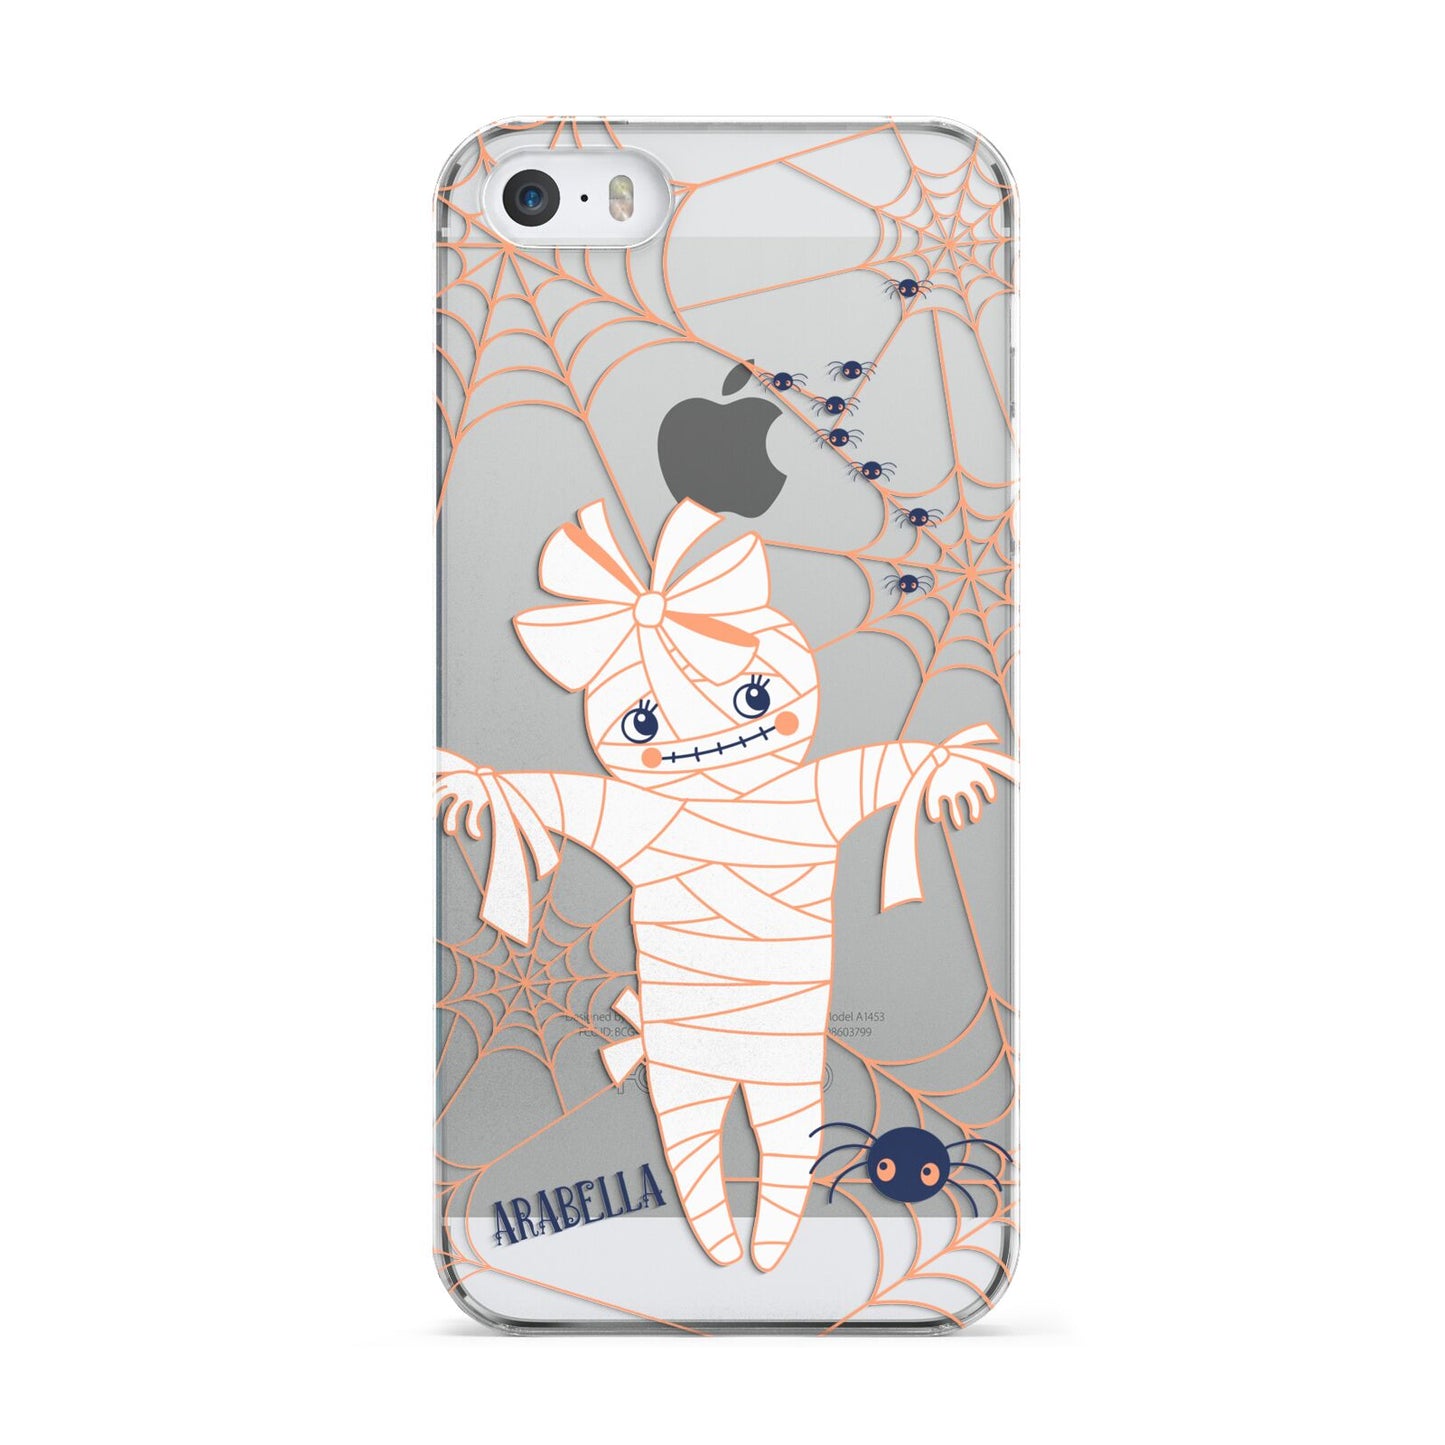 Mummy Halloween Apple iPhone 5 Case